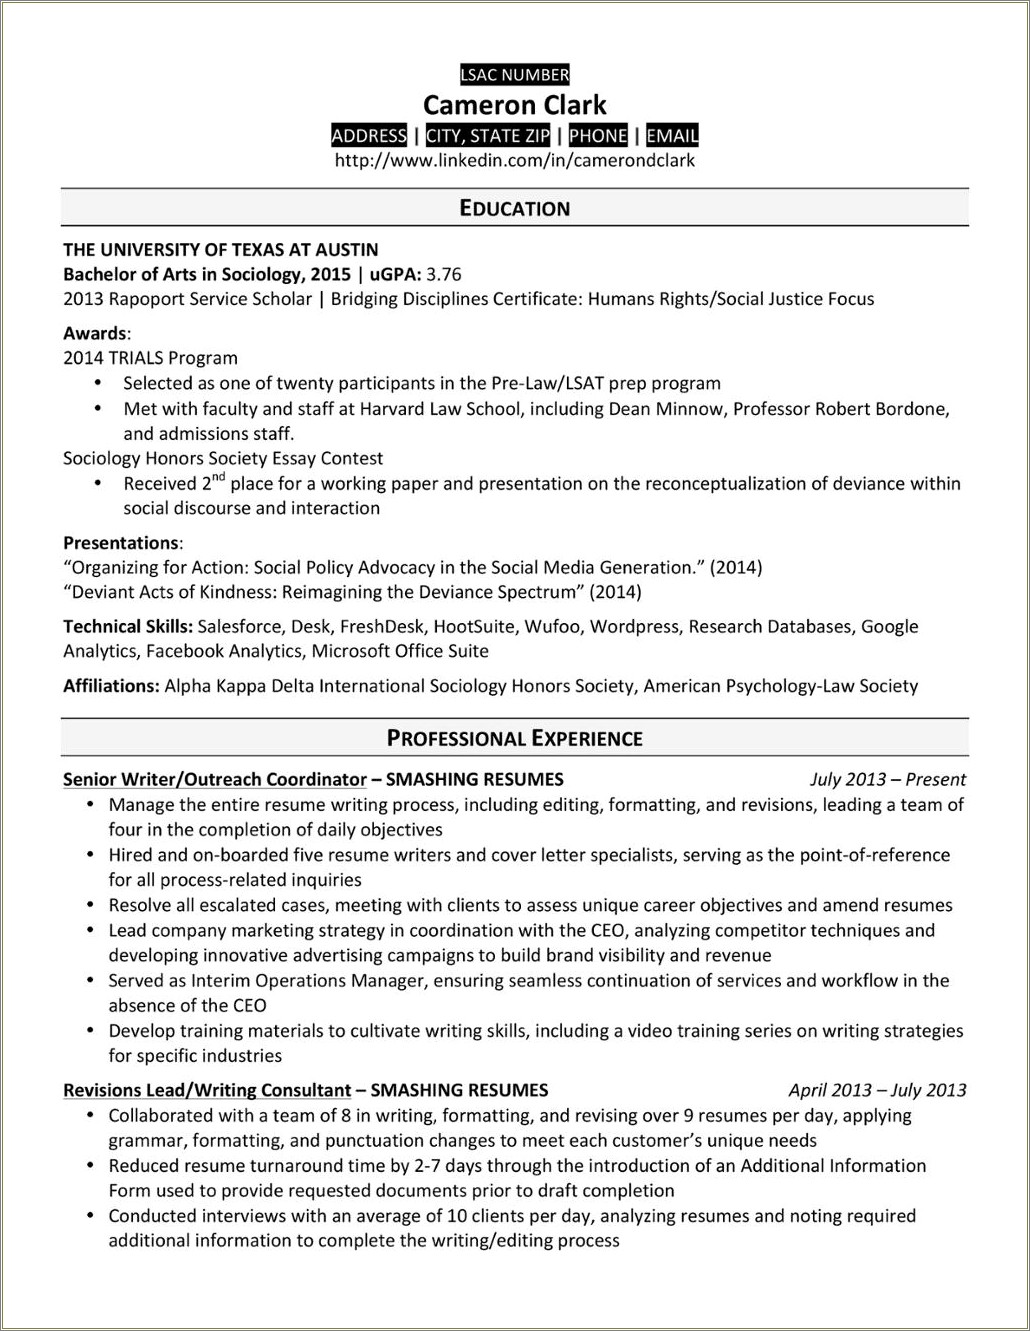 Sample Resume For Undergraduate Transfer Student